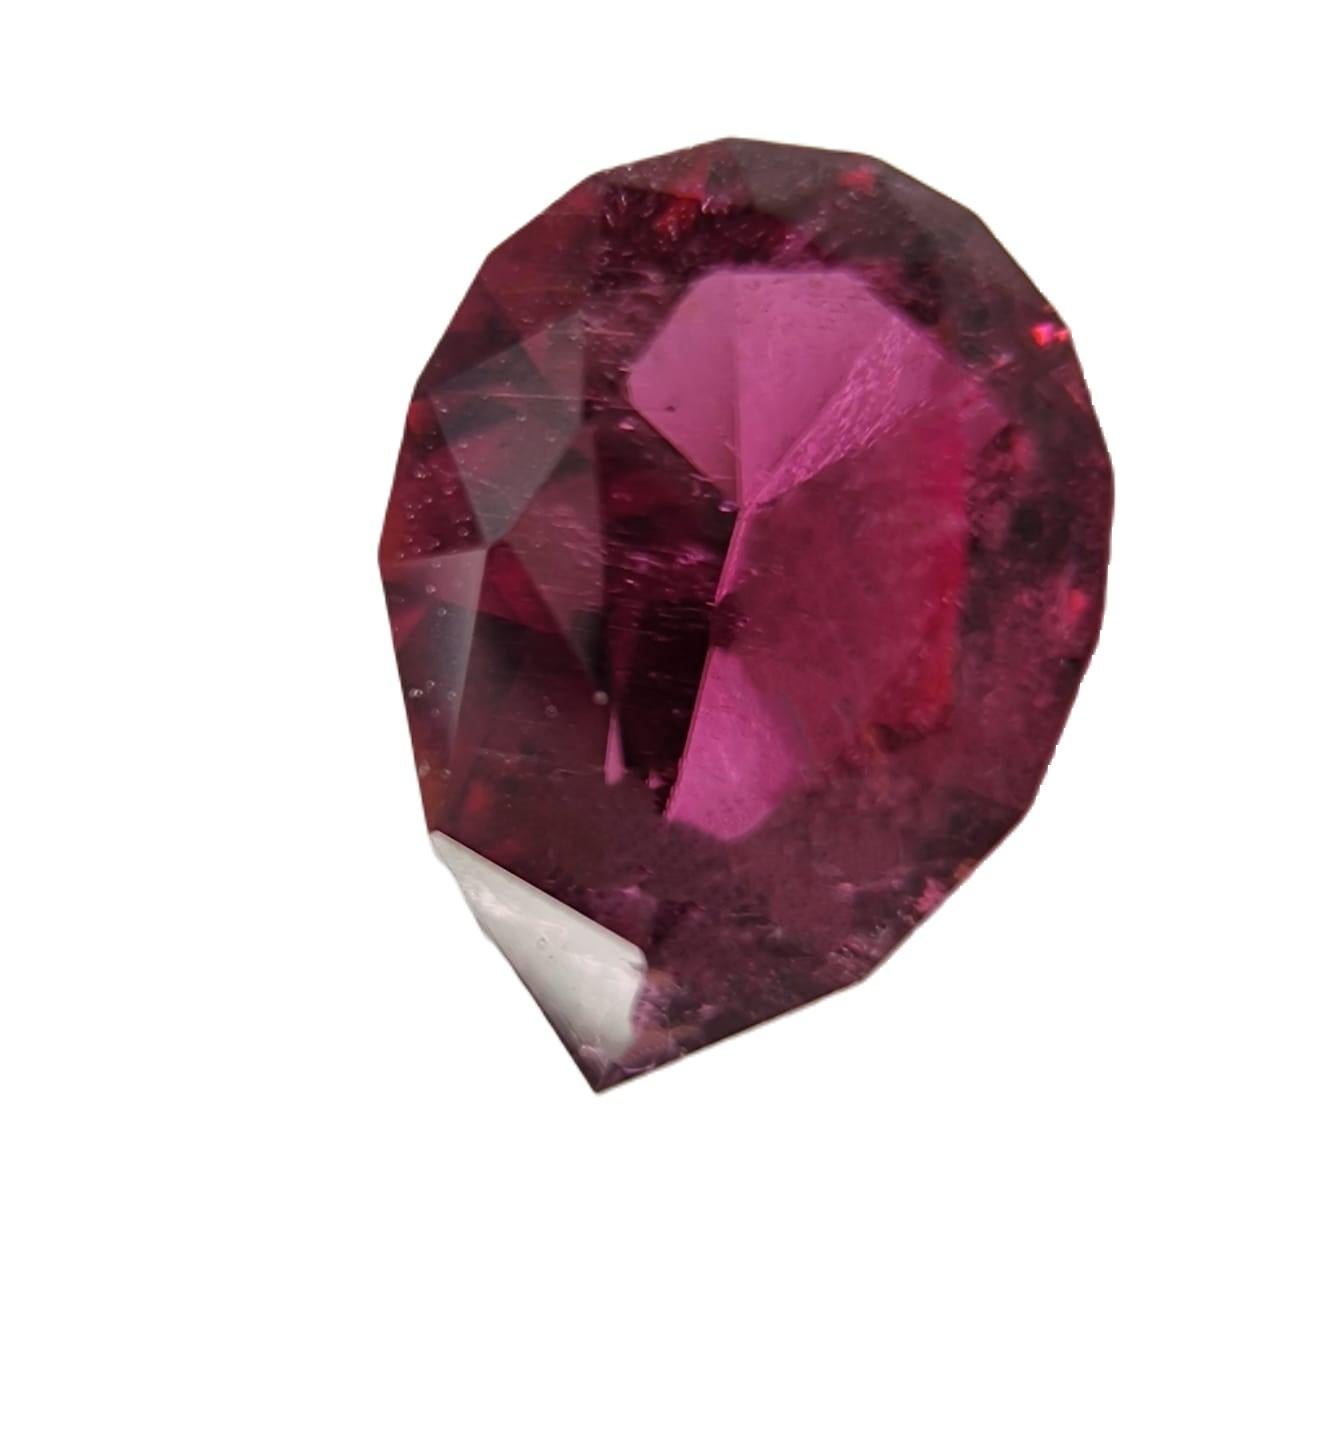 2.63ct Pear Cut Pinkish Red Rubellite Tourmaline Gemstone  For Sale 1